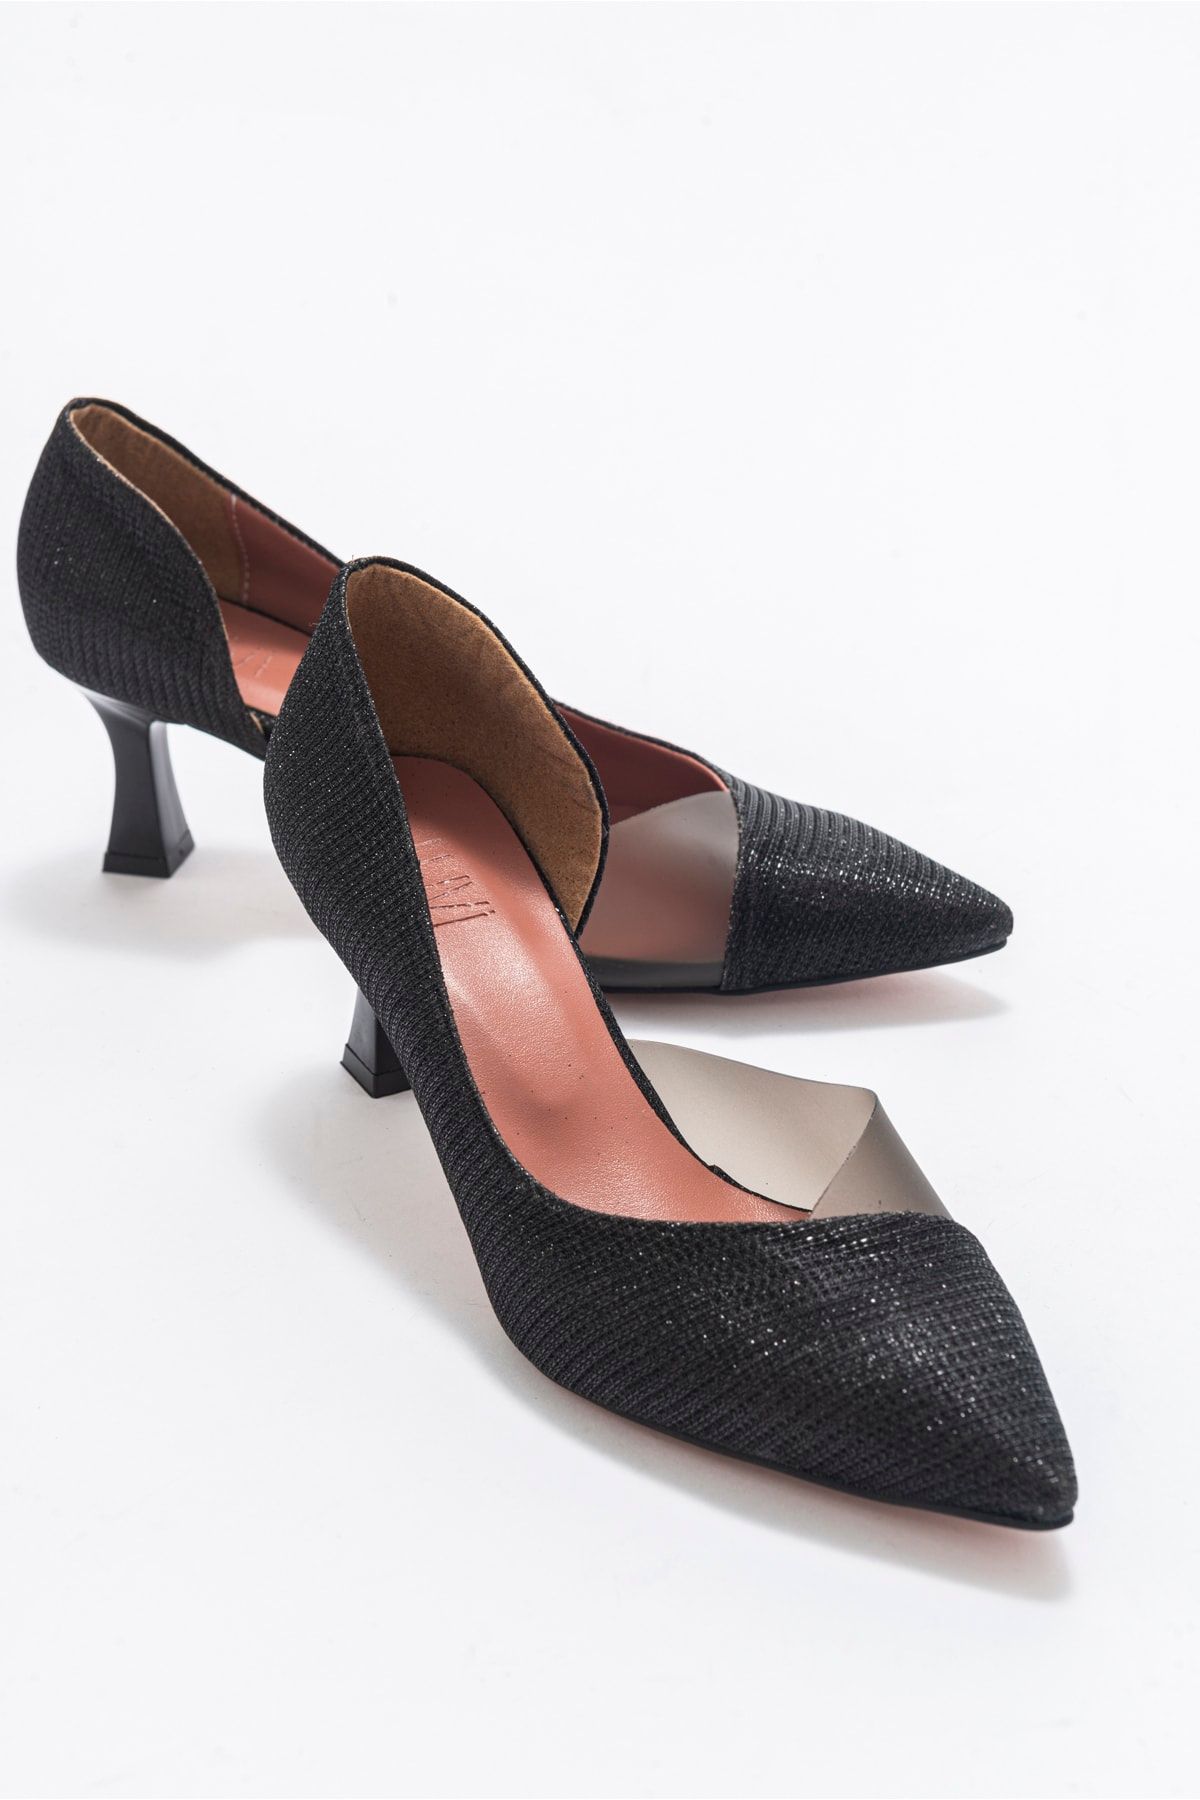 luvishoes 353 Siyah Simli Topuklu Kadın Ayakkabı